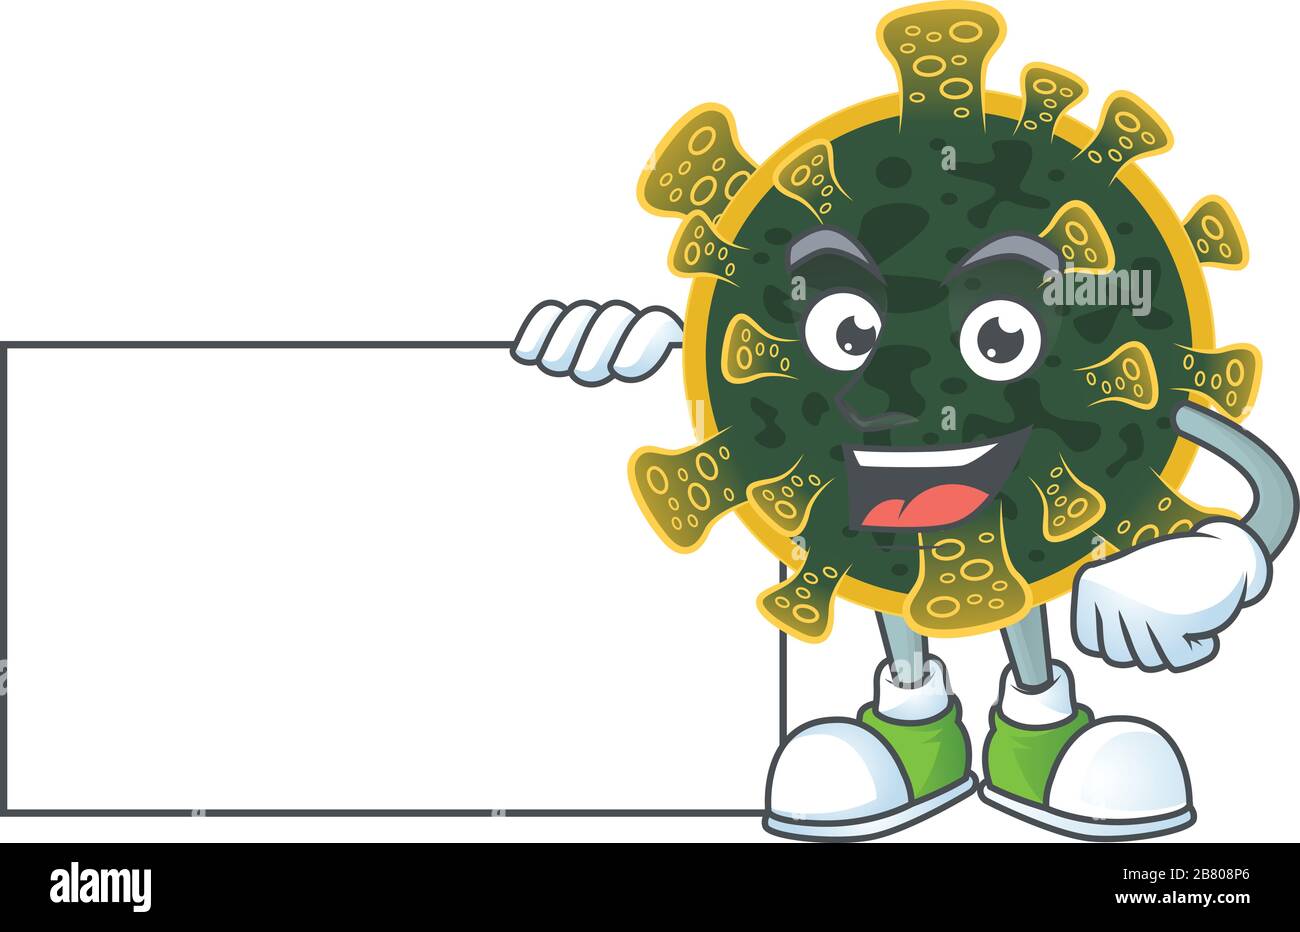 Funny New Coronavirus Cartoon Design Thumbs Up With A White Board Stock Vector Image Art Alamy